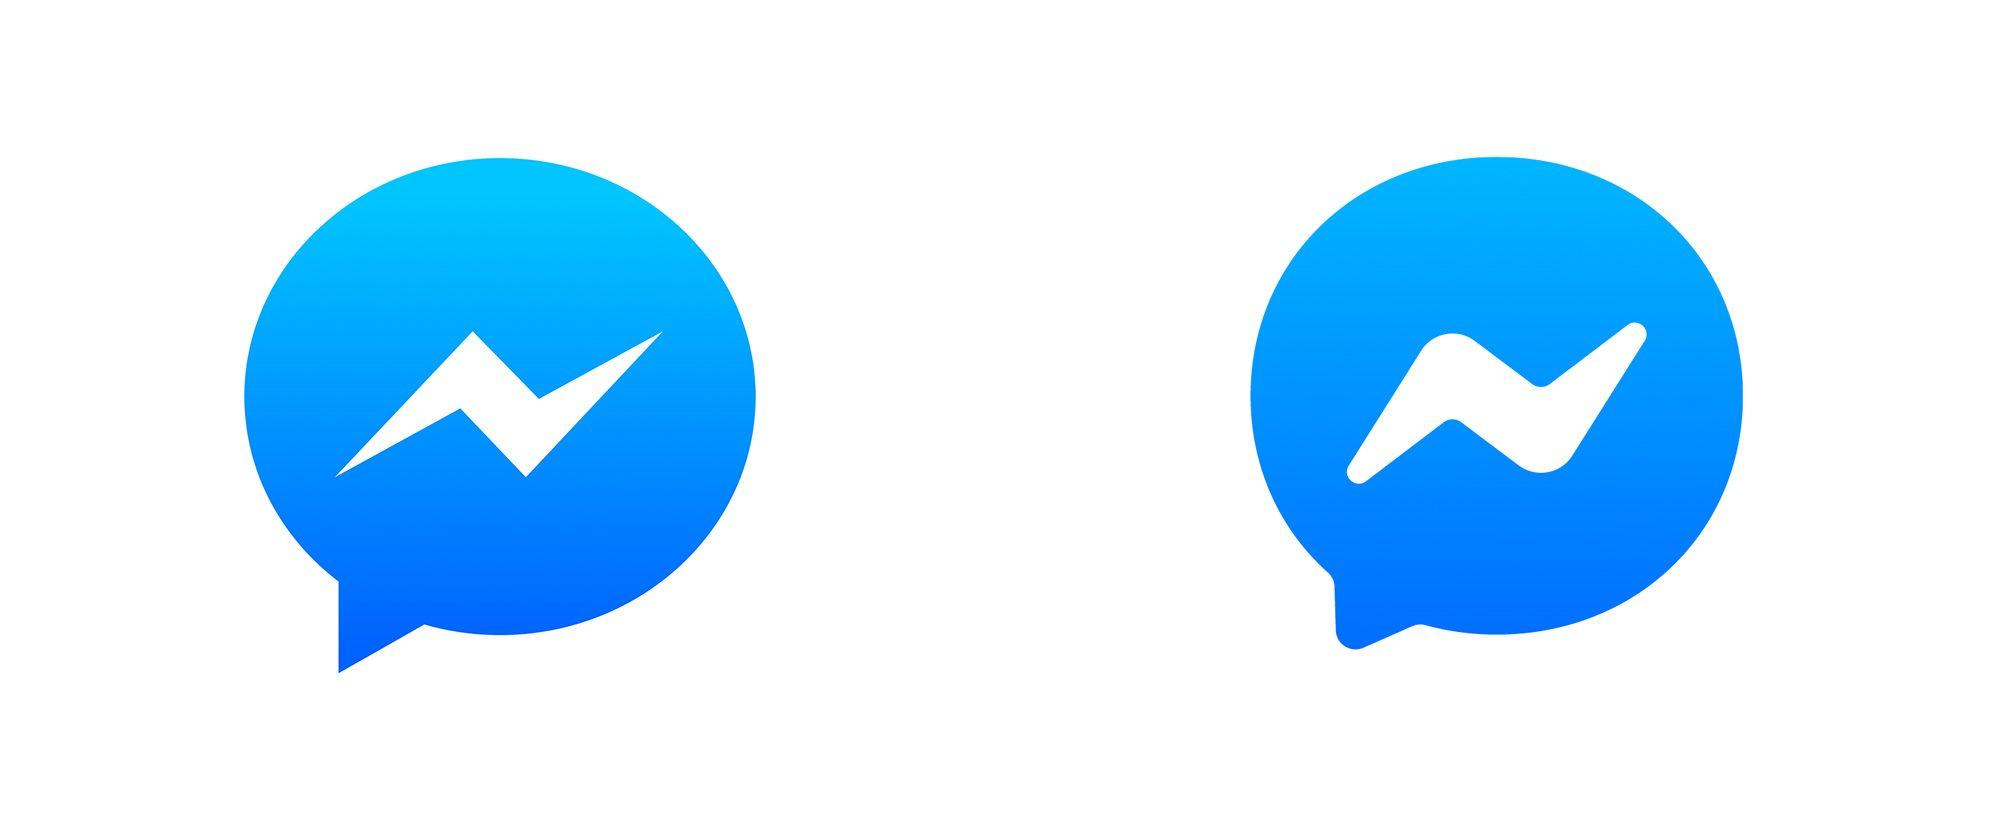 New Facebook Logo - Brand New: speech bubble